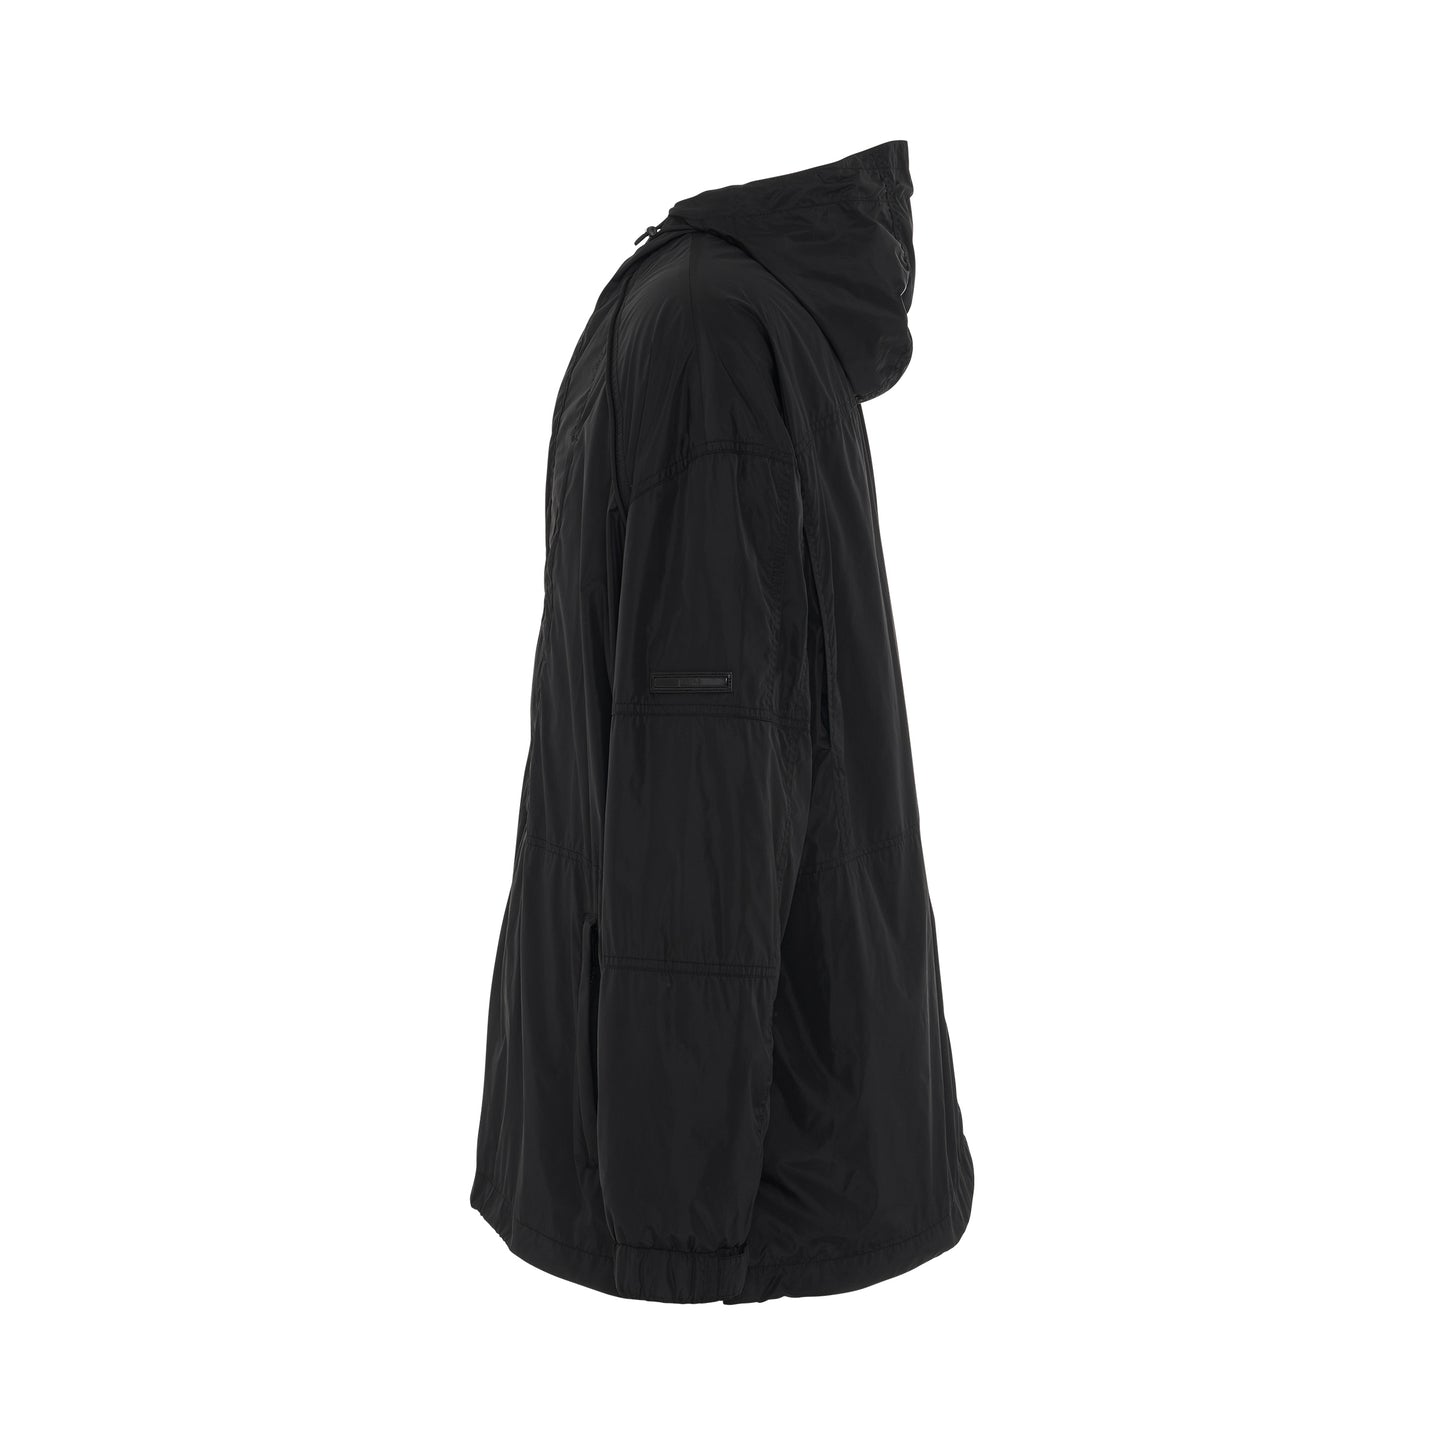 [T-Line] Hood Pull Over Anorak Jacket in Black